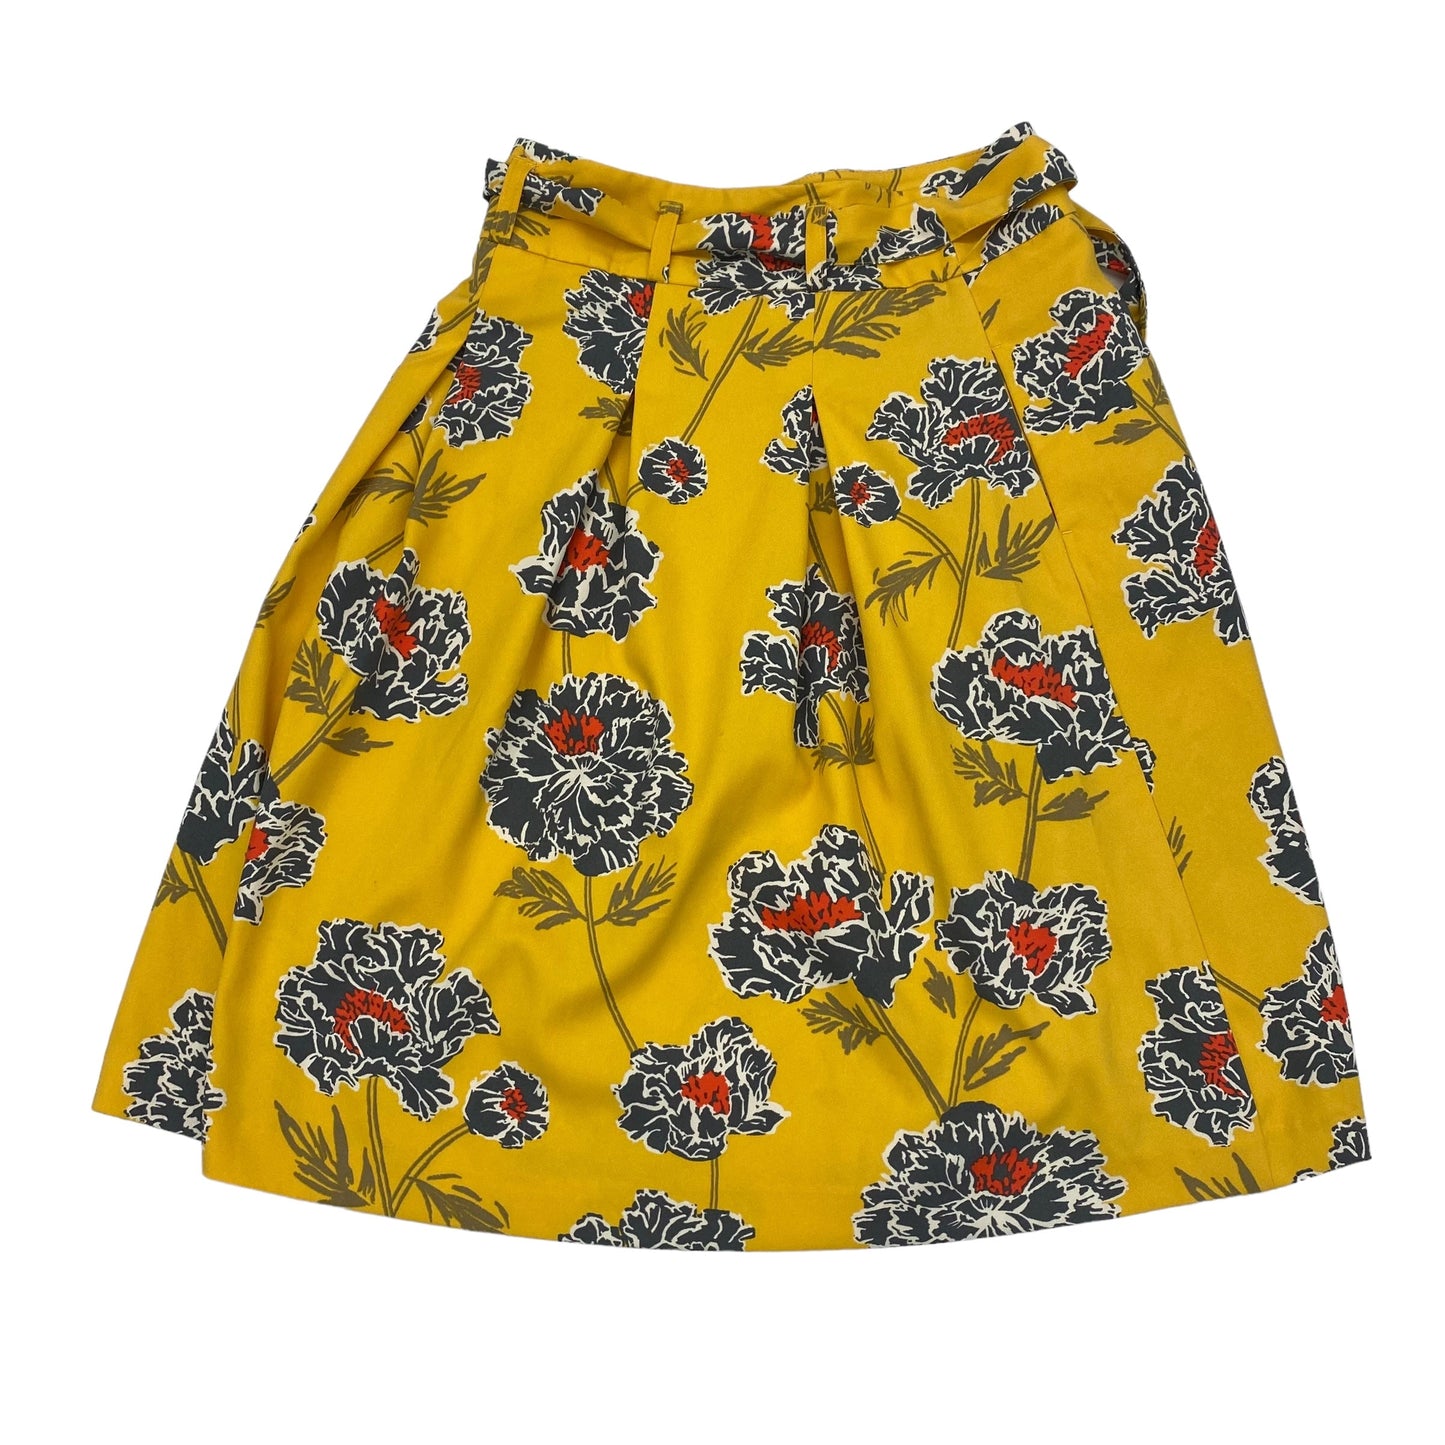 Skirt Midi By Banana Republic  Size: 0petite